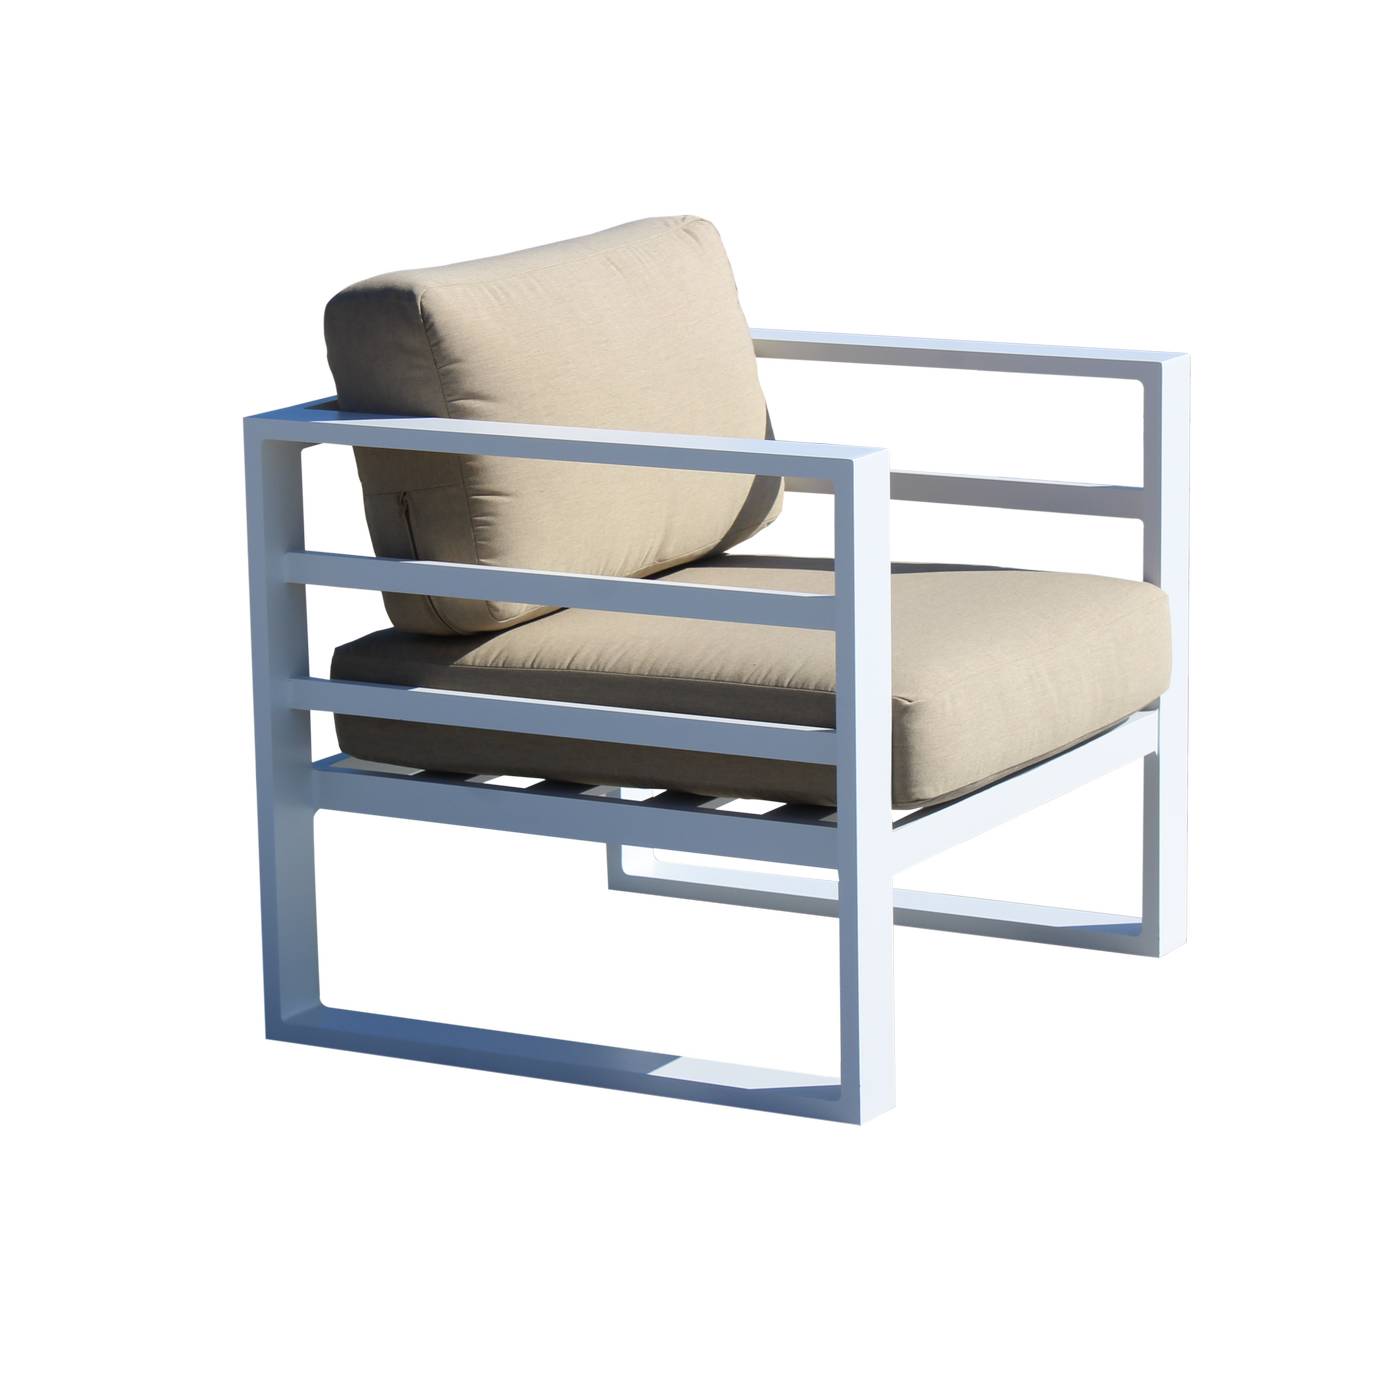 Set Aluminio Dalas-10 - Conjunto de aluminio para jardín o terraza: sofá 3 plazas + 2 sillones + mesa de centro + 2 taburetes. Disponible en color blanco, antracita, champagne, plata o marrón..